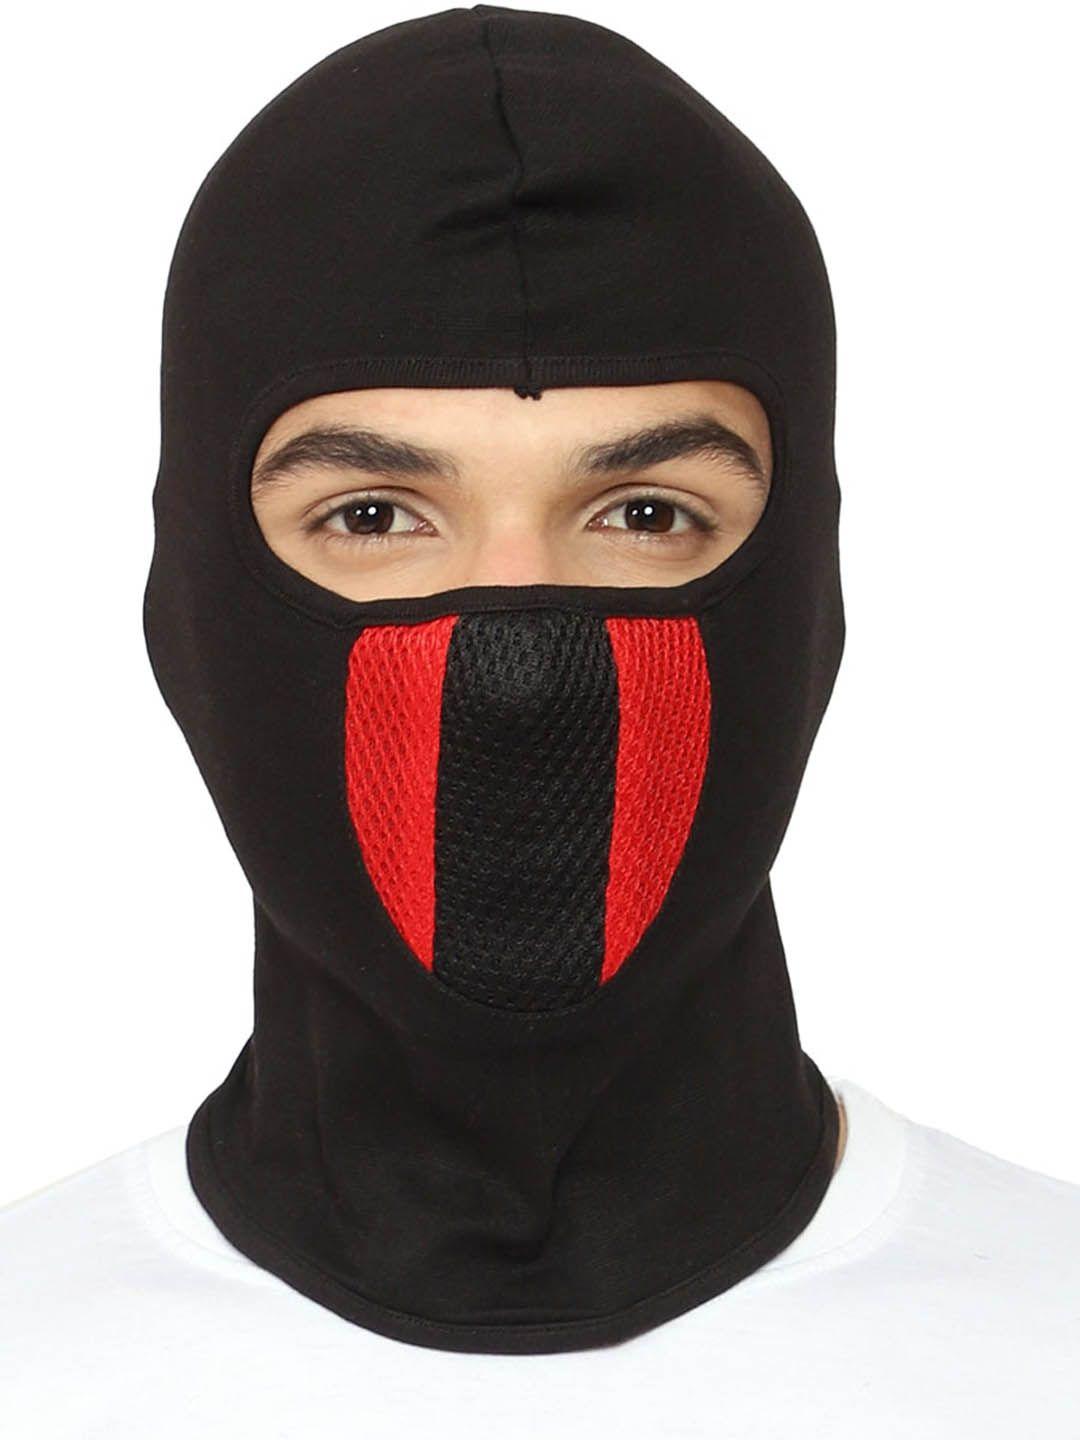 gajraj reusable full face mask with air filter mesh